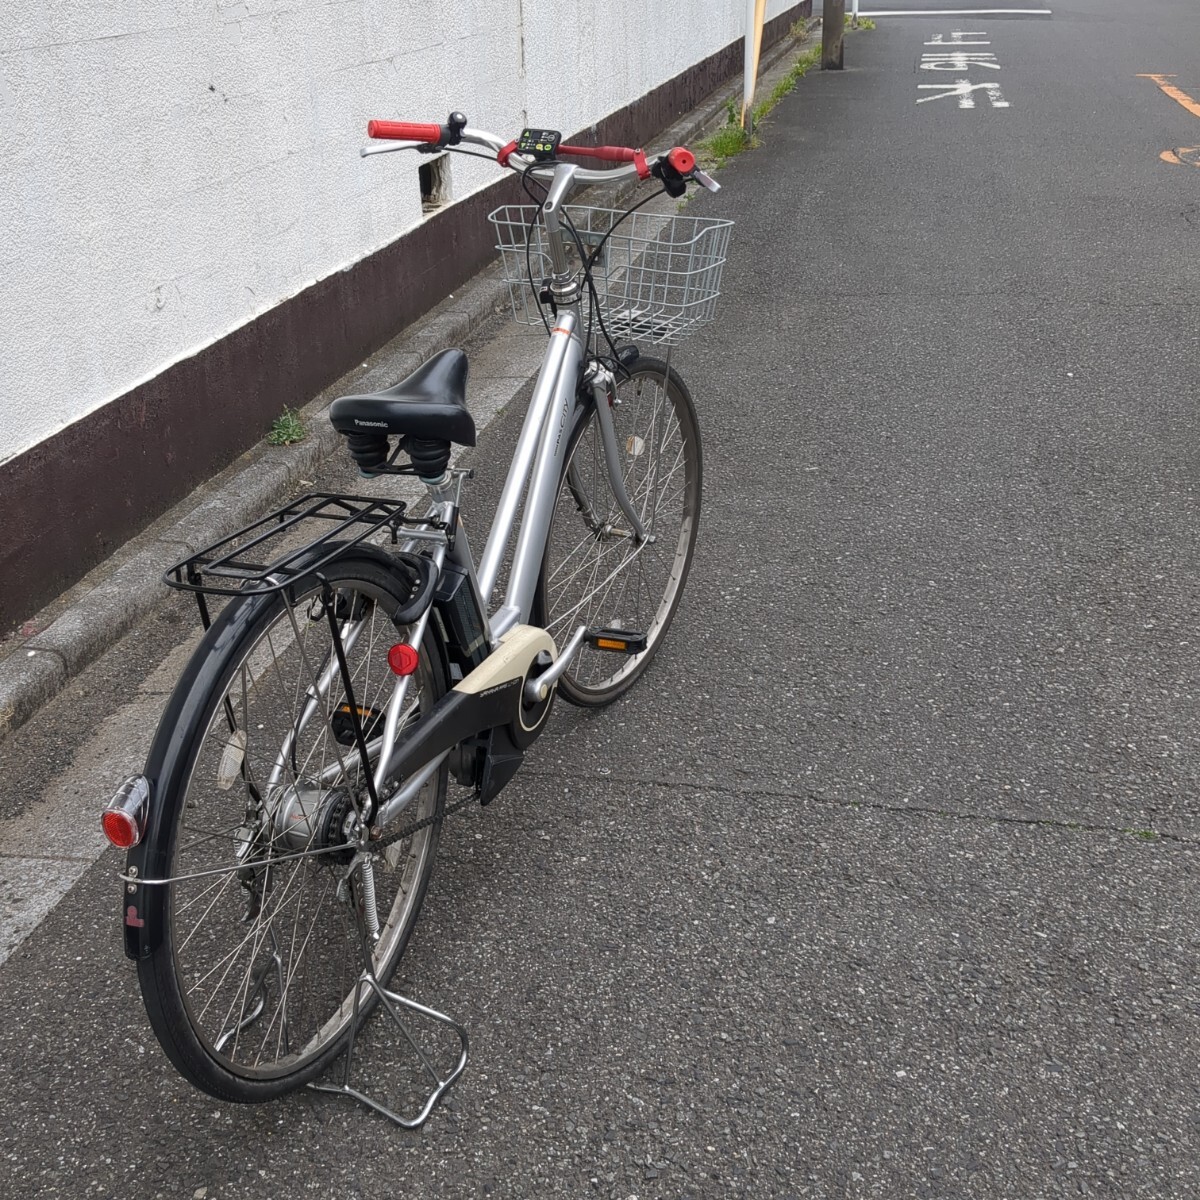  Yamaha велосипед с электроприводом Pas Saitama префектура из 